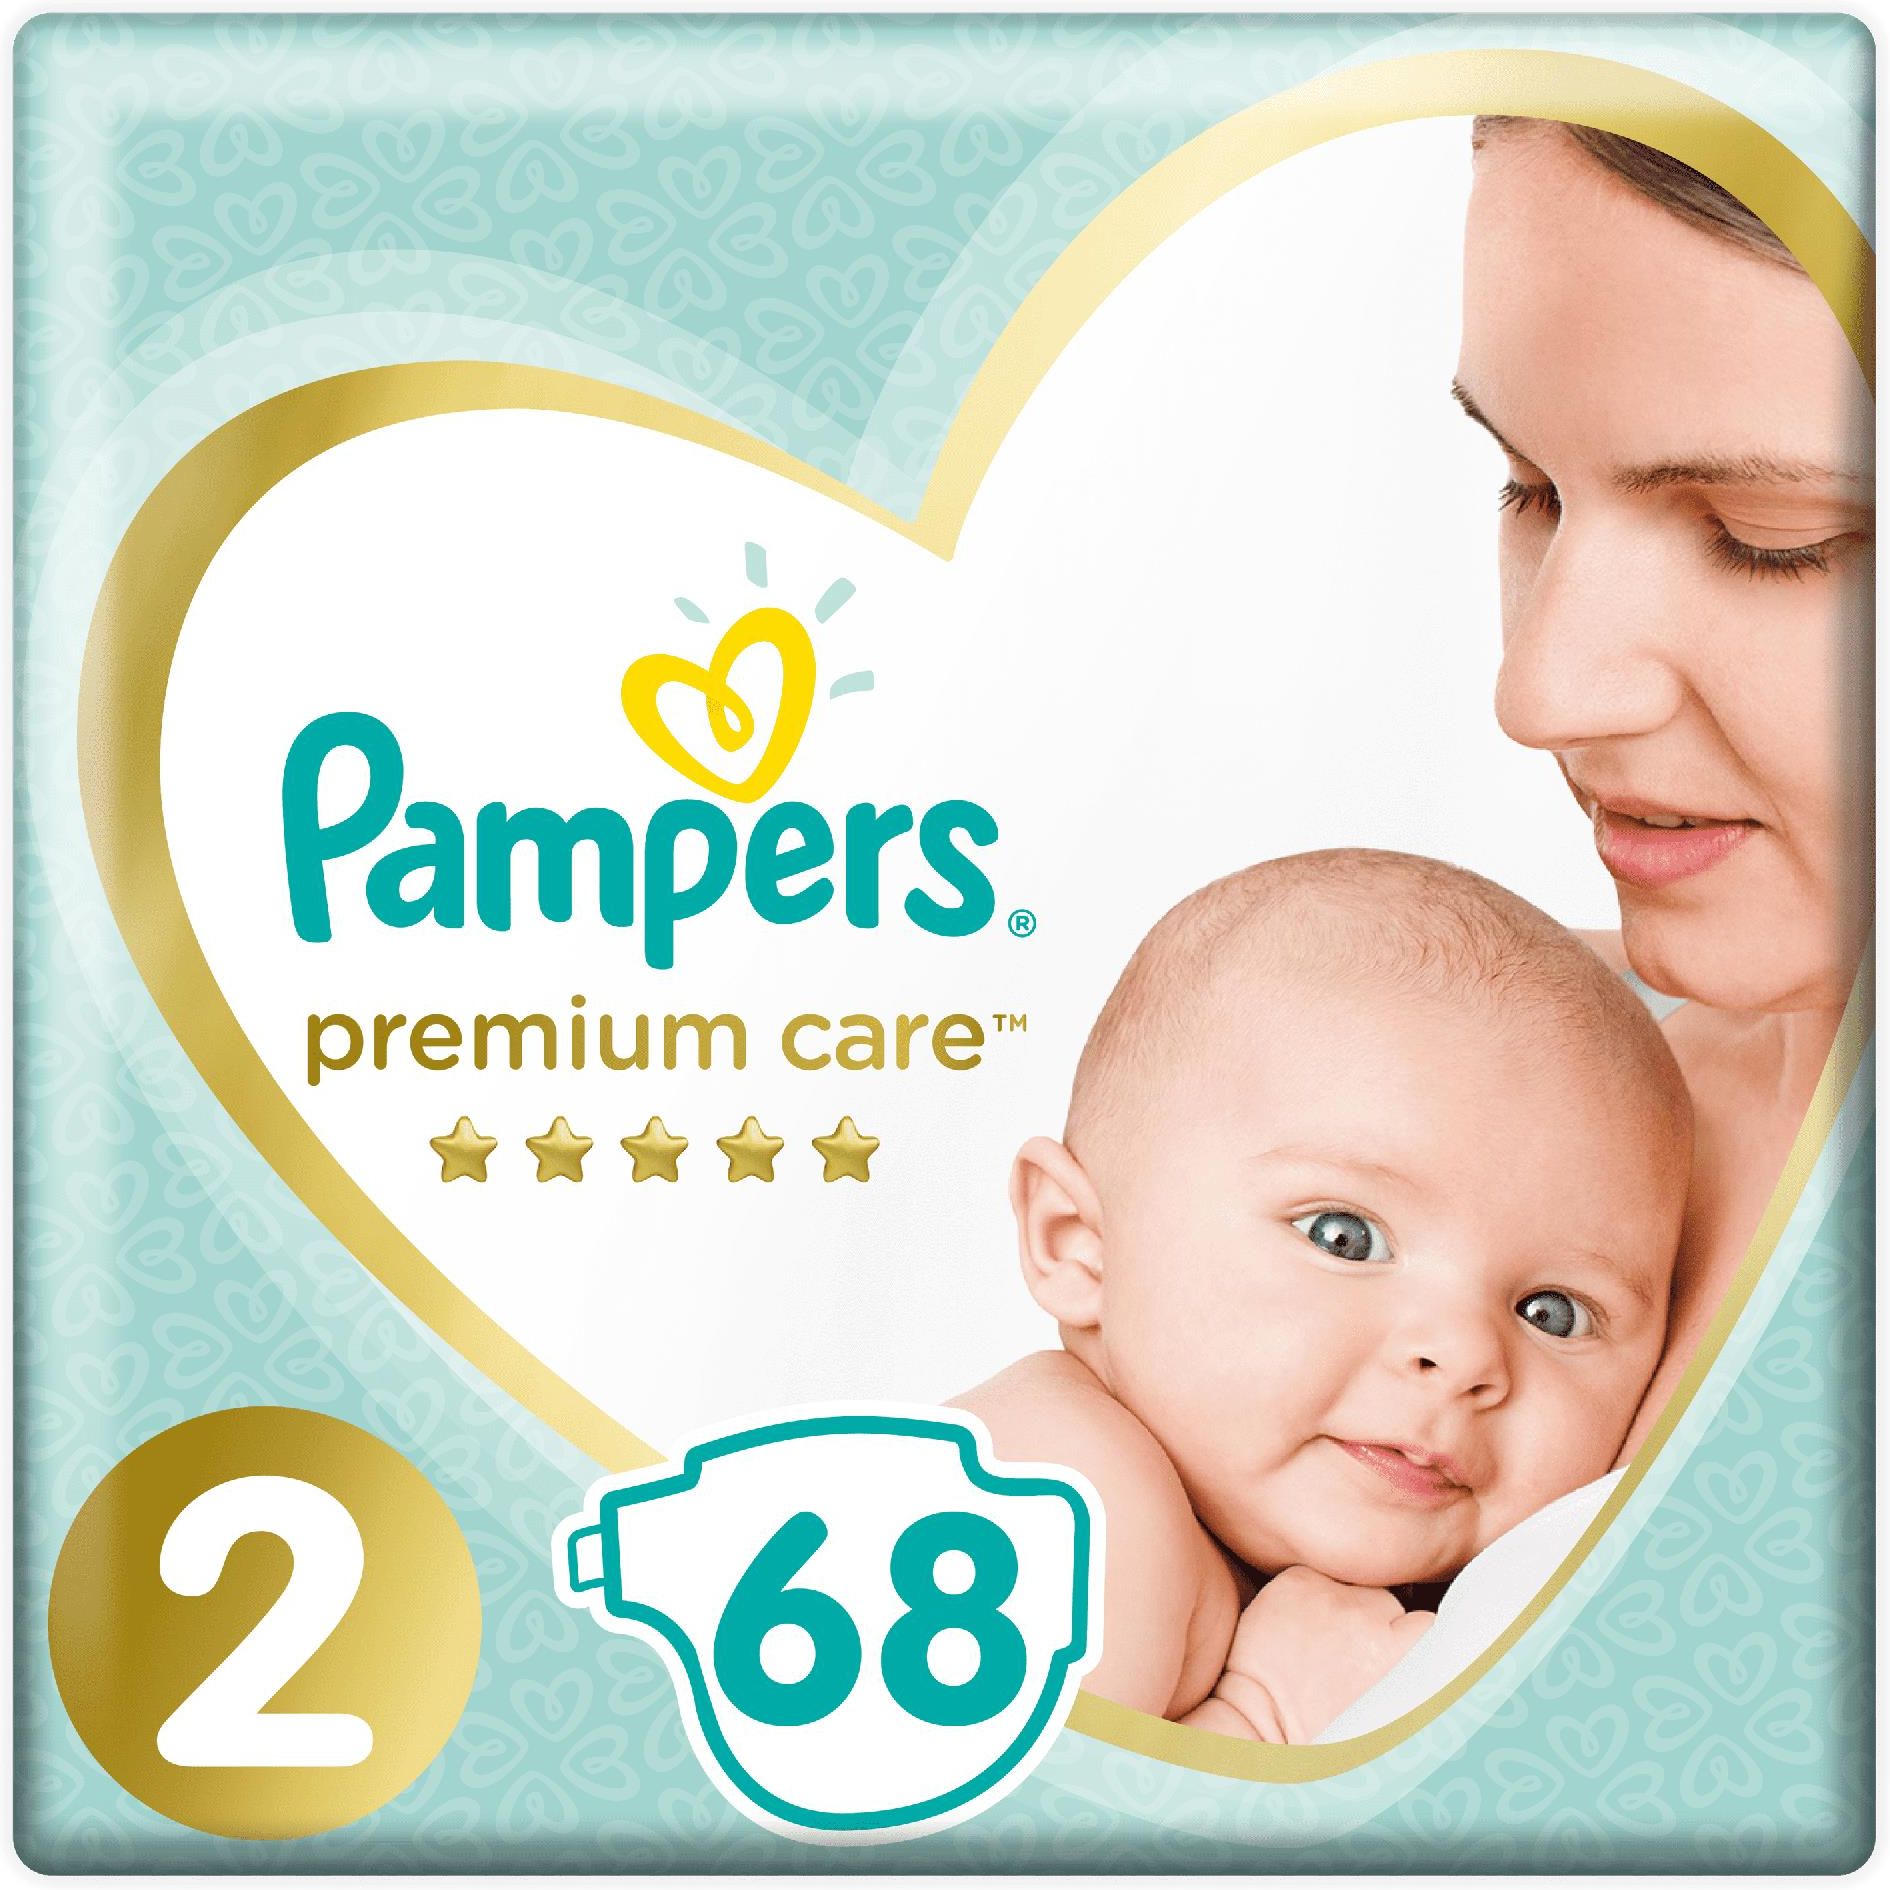 pampers pieluszki premium care newborn mini 168 ceneo